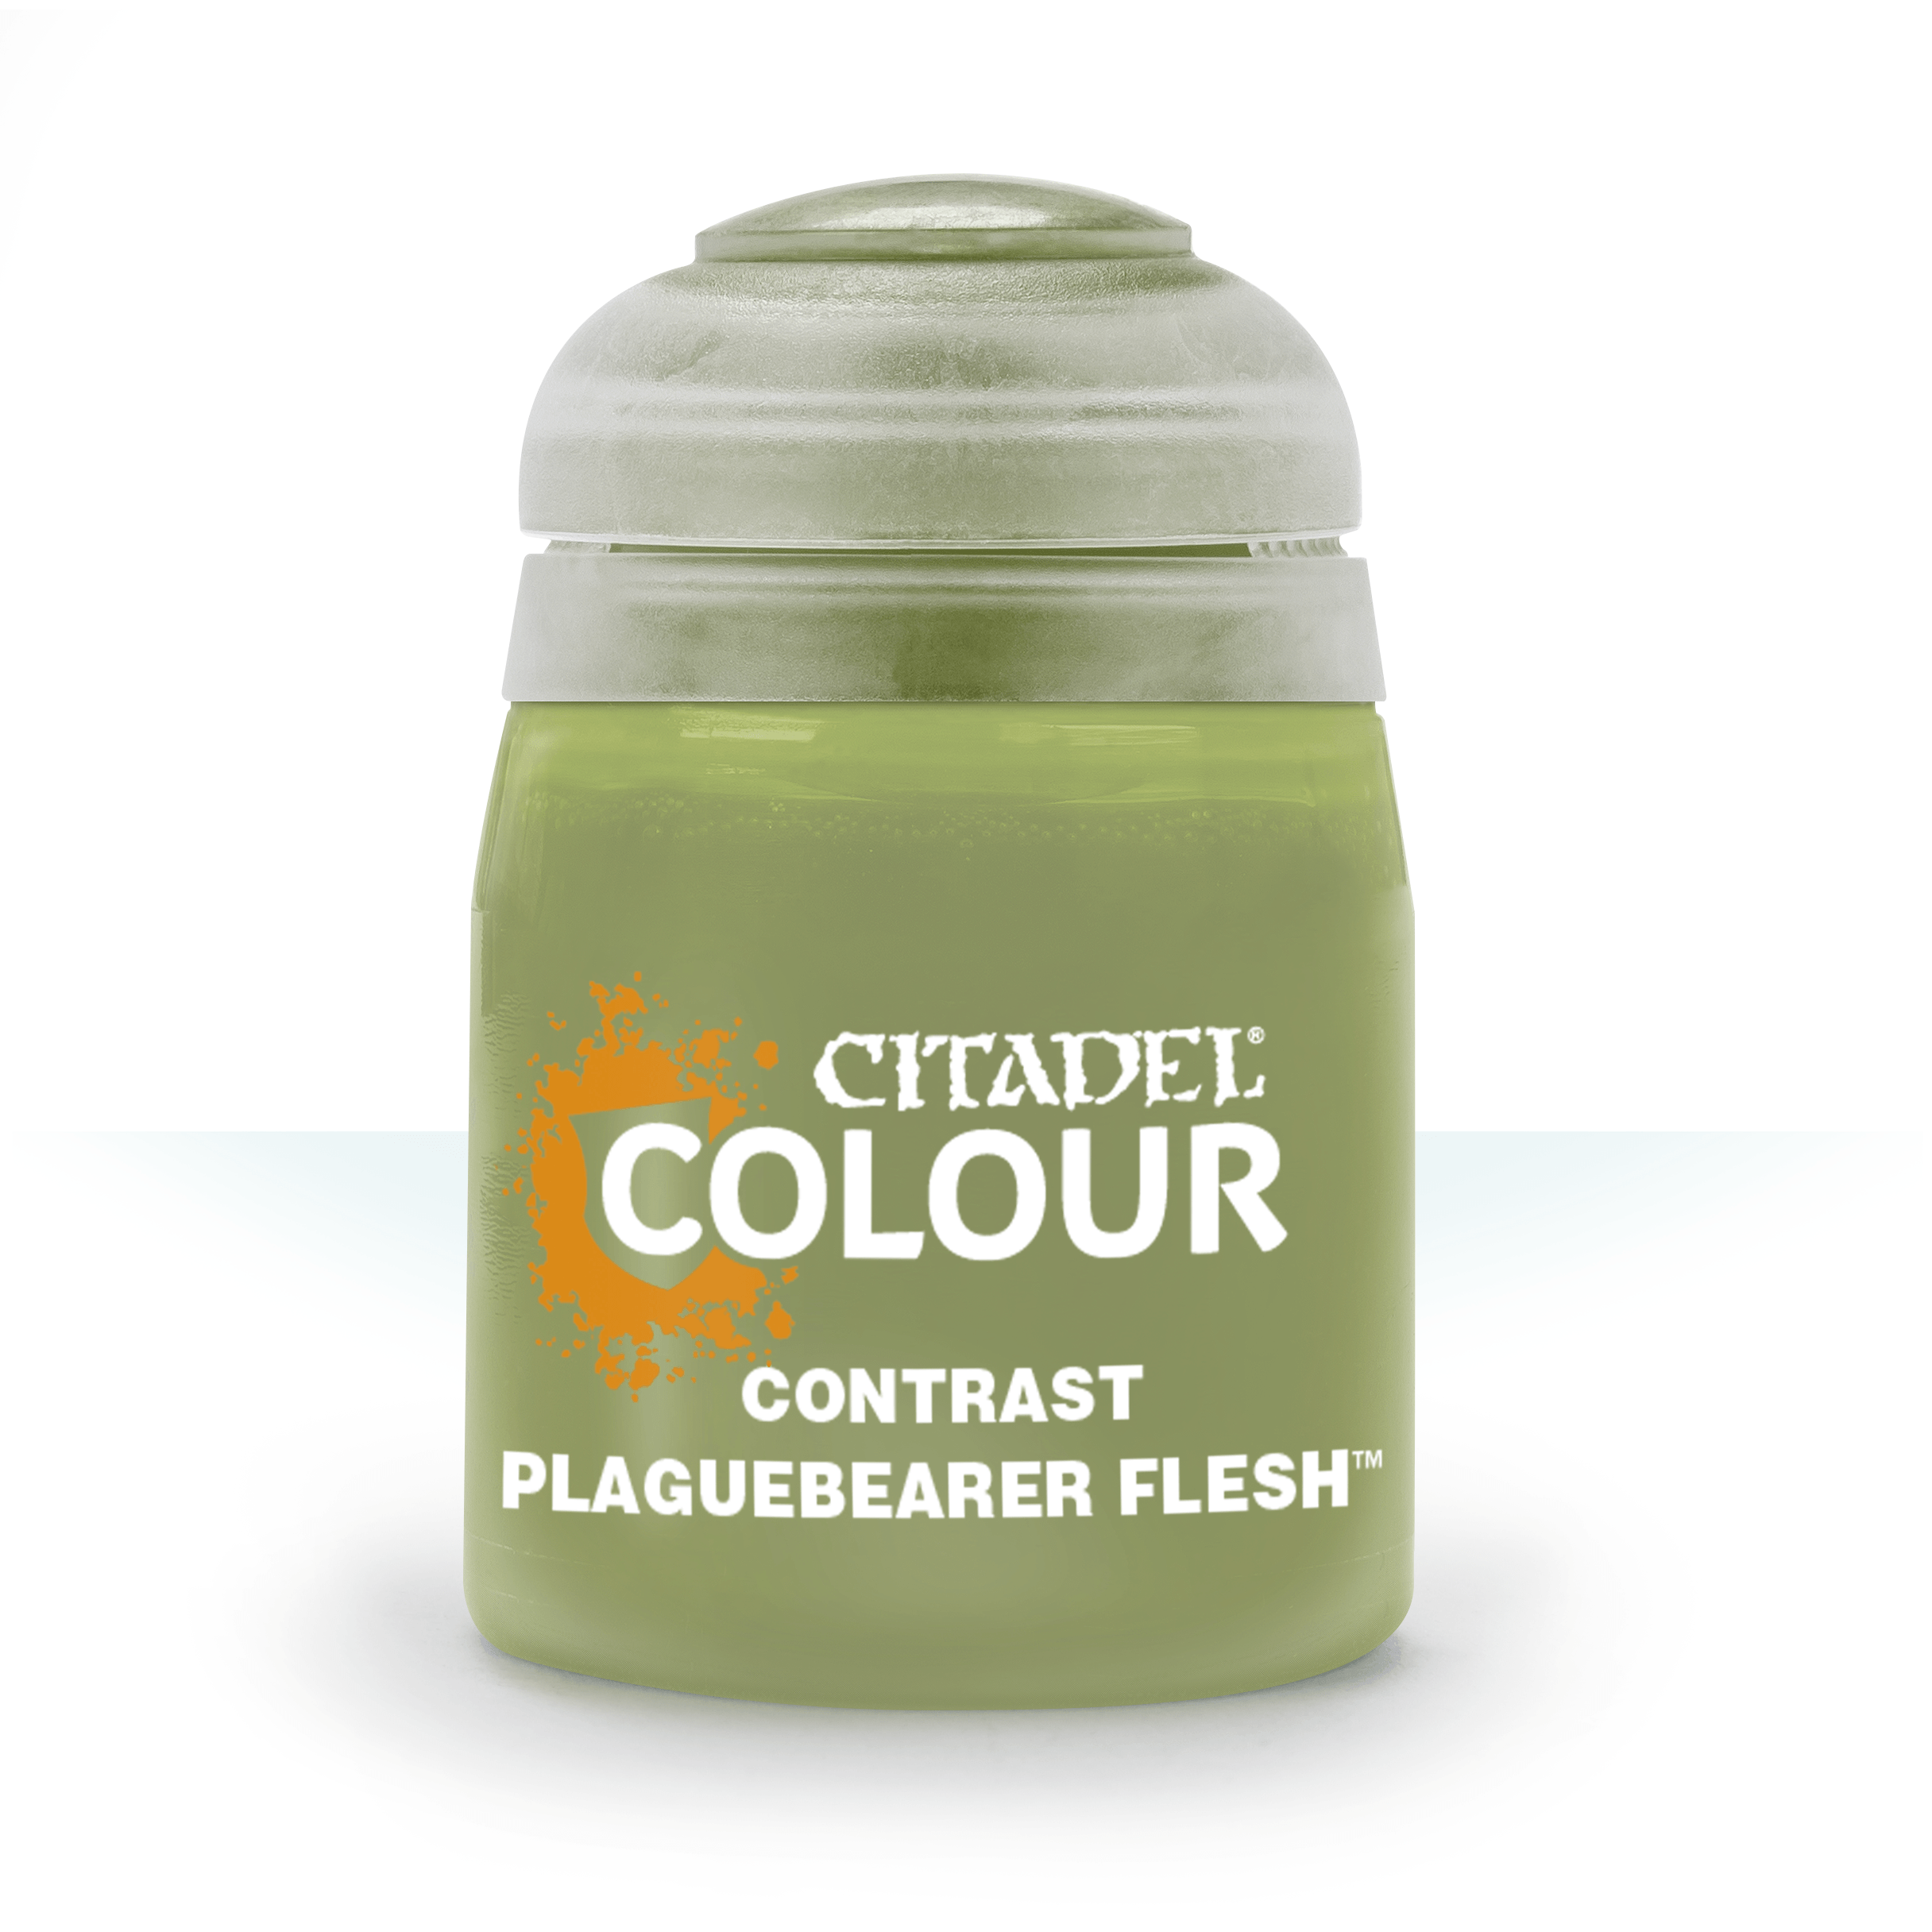 Contrast Plaguebearer Flesh - Citadel Colour